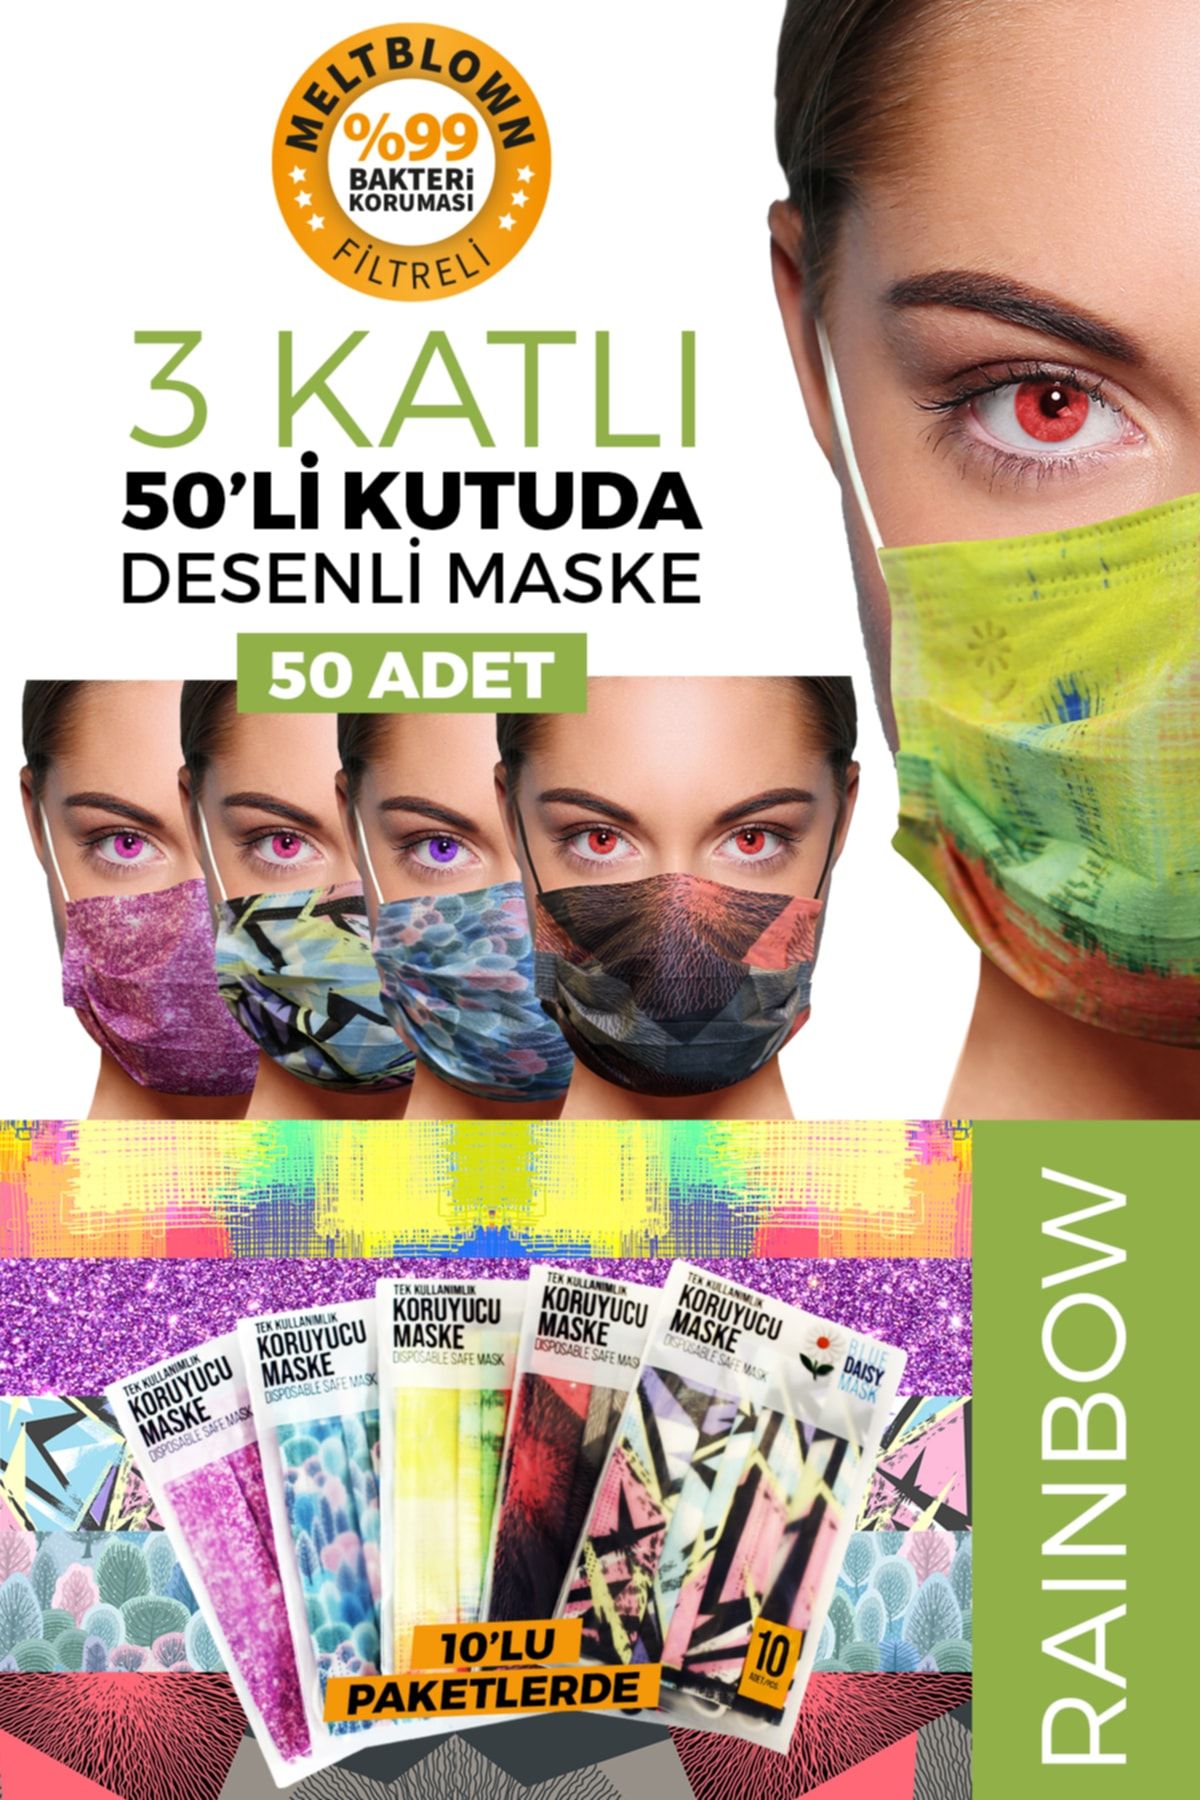 BlueDaisyMask RAİNBOW Meltblown Filtreli 5 Farklı Desen 50 Adet 3 Katlı Kokusuz Cerrahi Yüz Maskesi